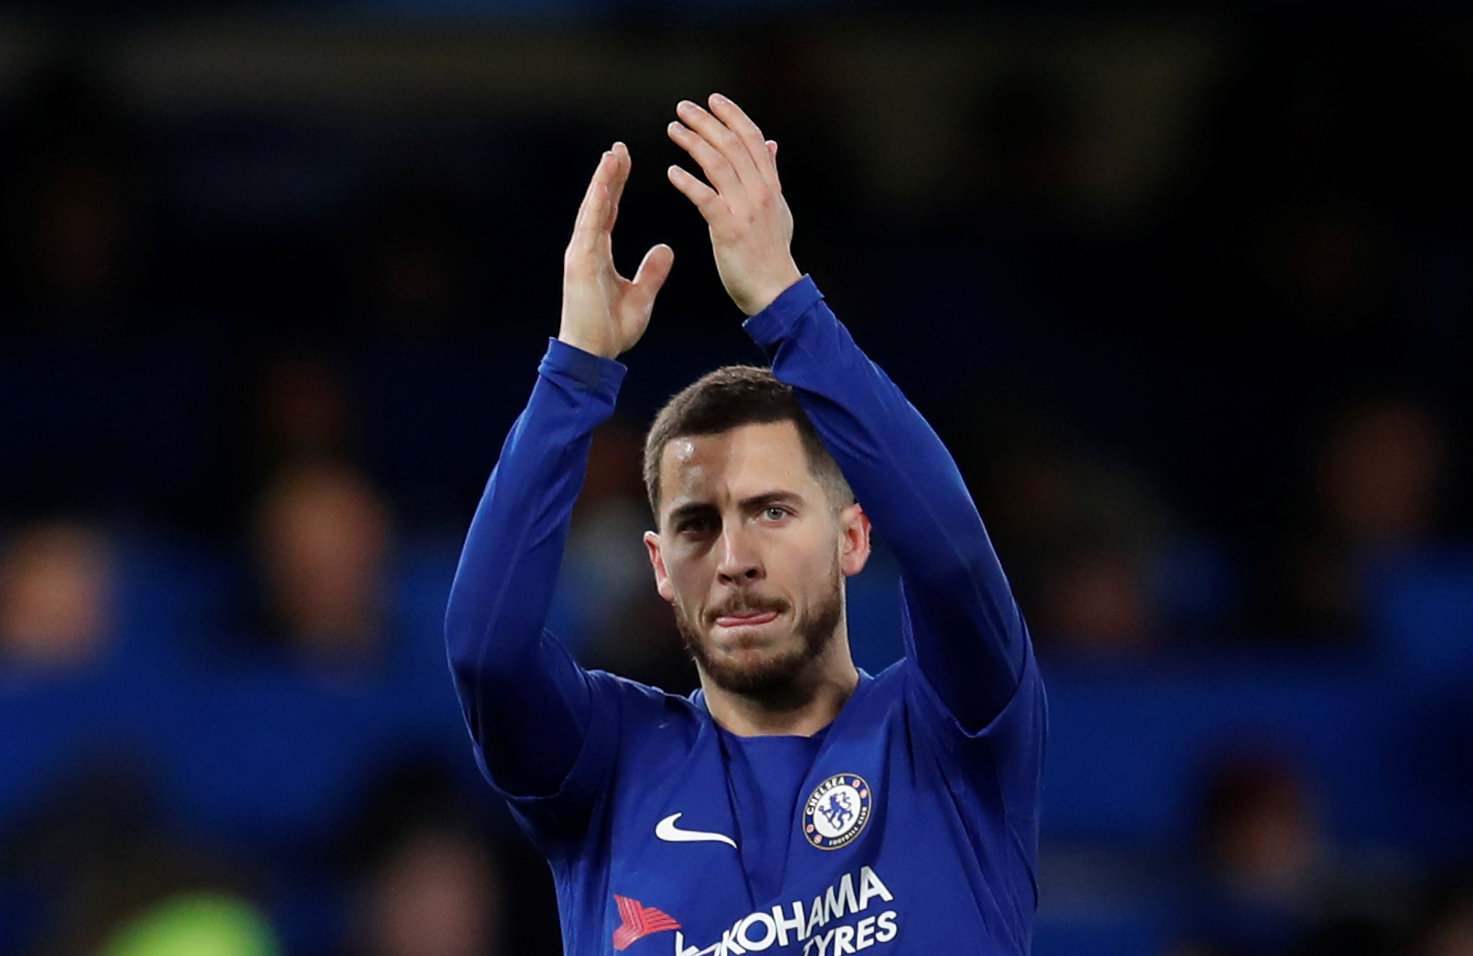 Football: Chelsea target top-four finish, says Hazard